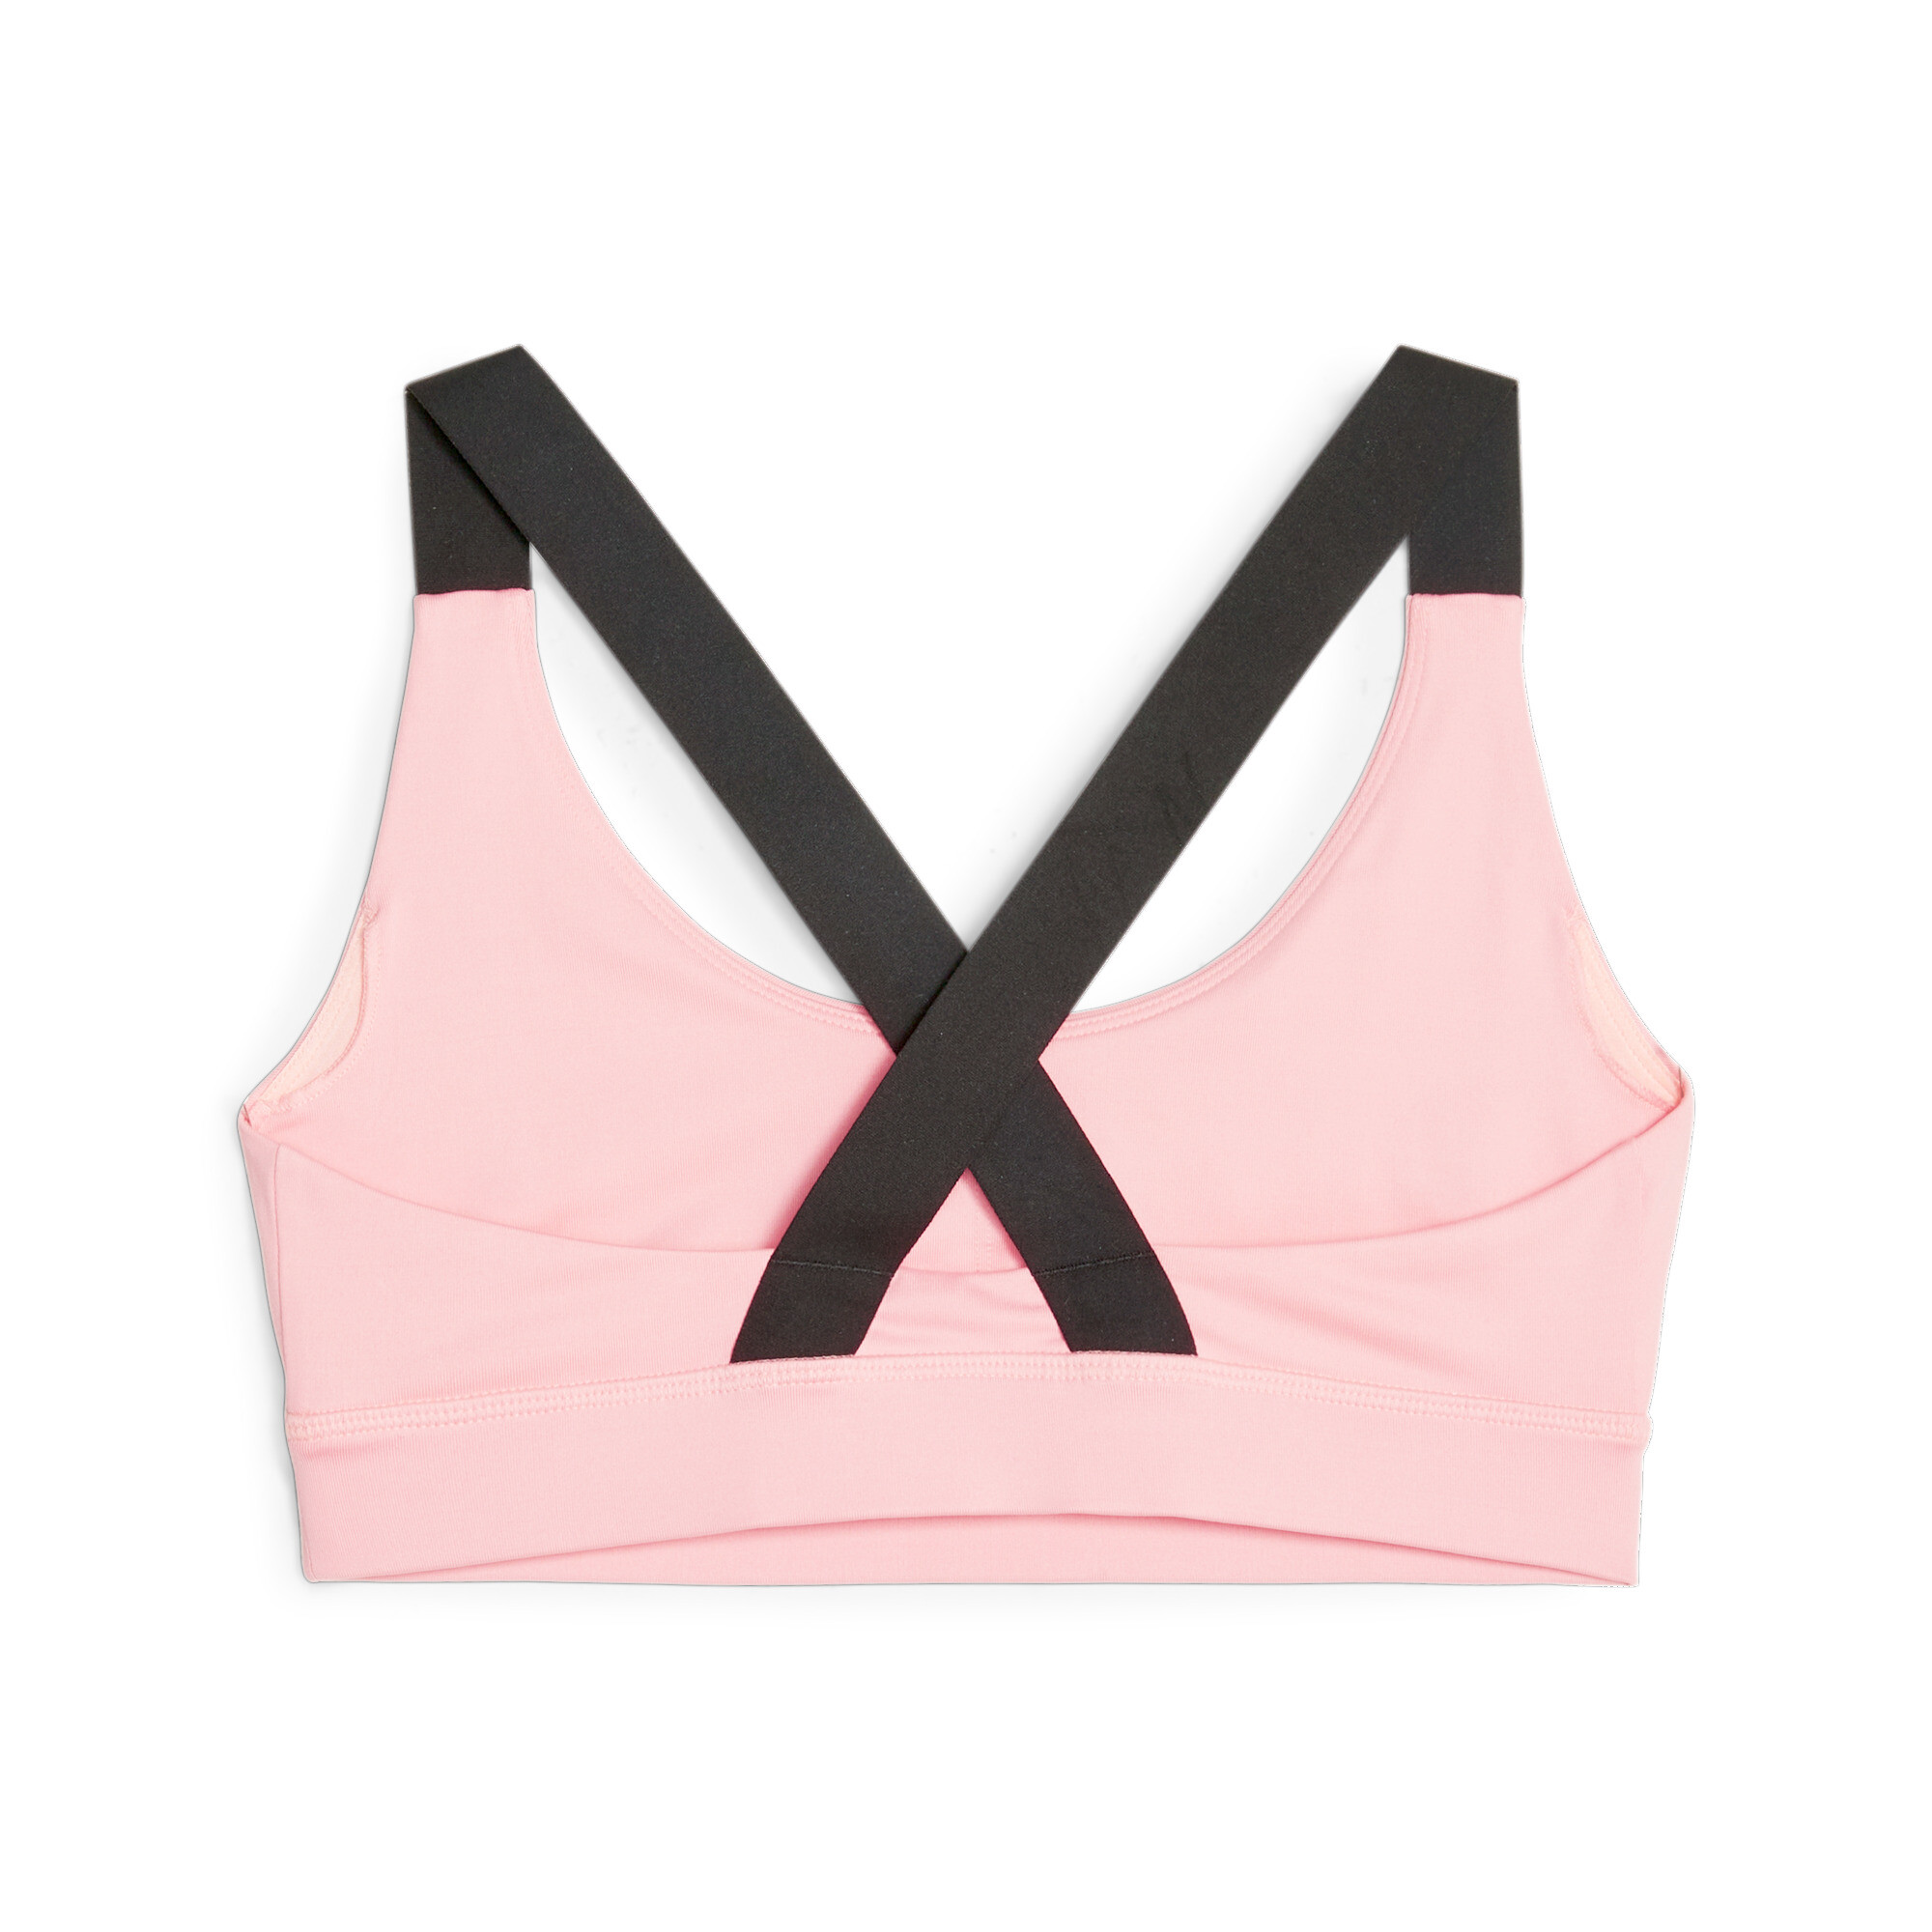 Women's Puma Fit Mid Impact Training Bra, Pink, Size XXS, Clothing